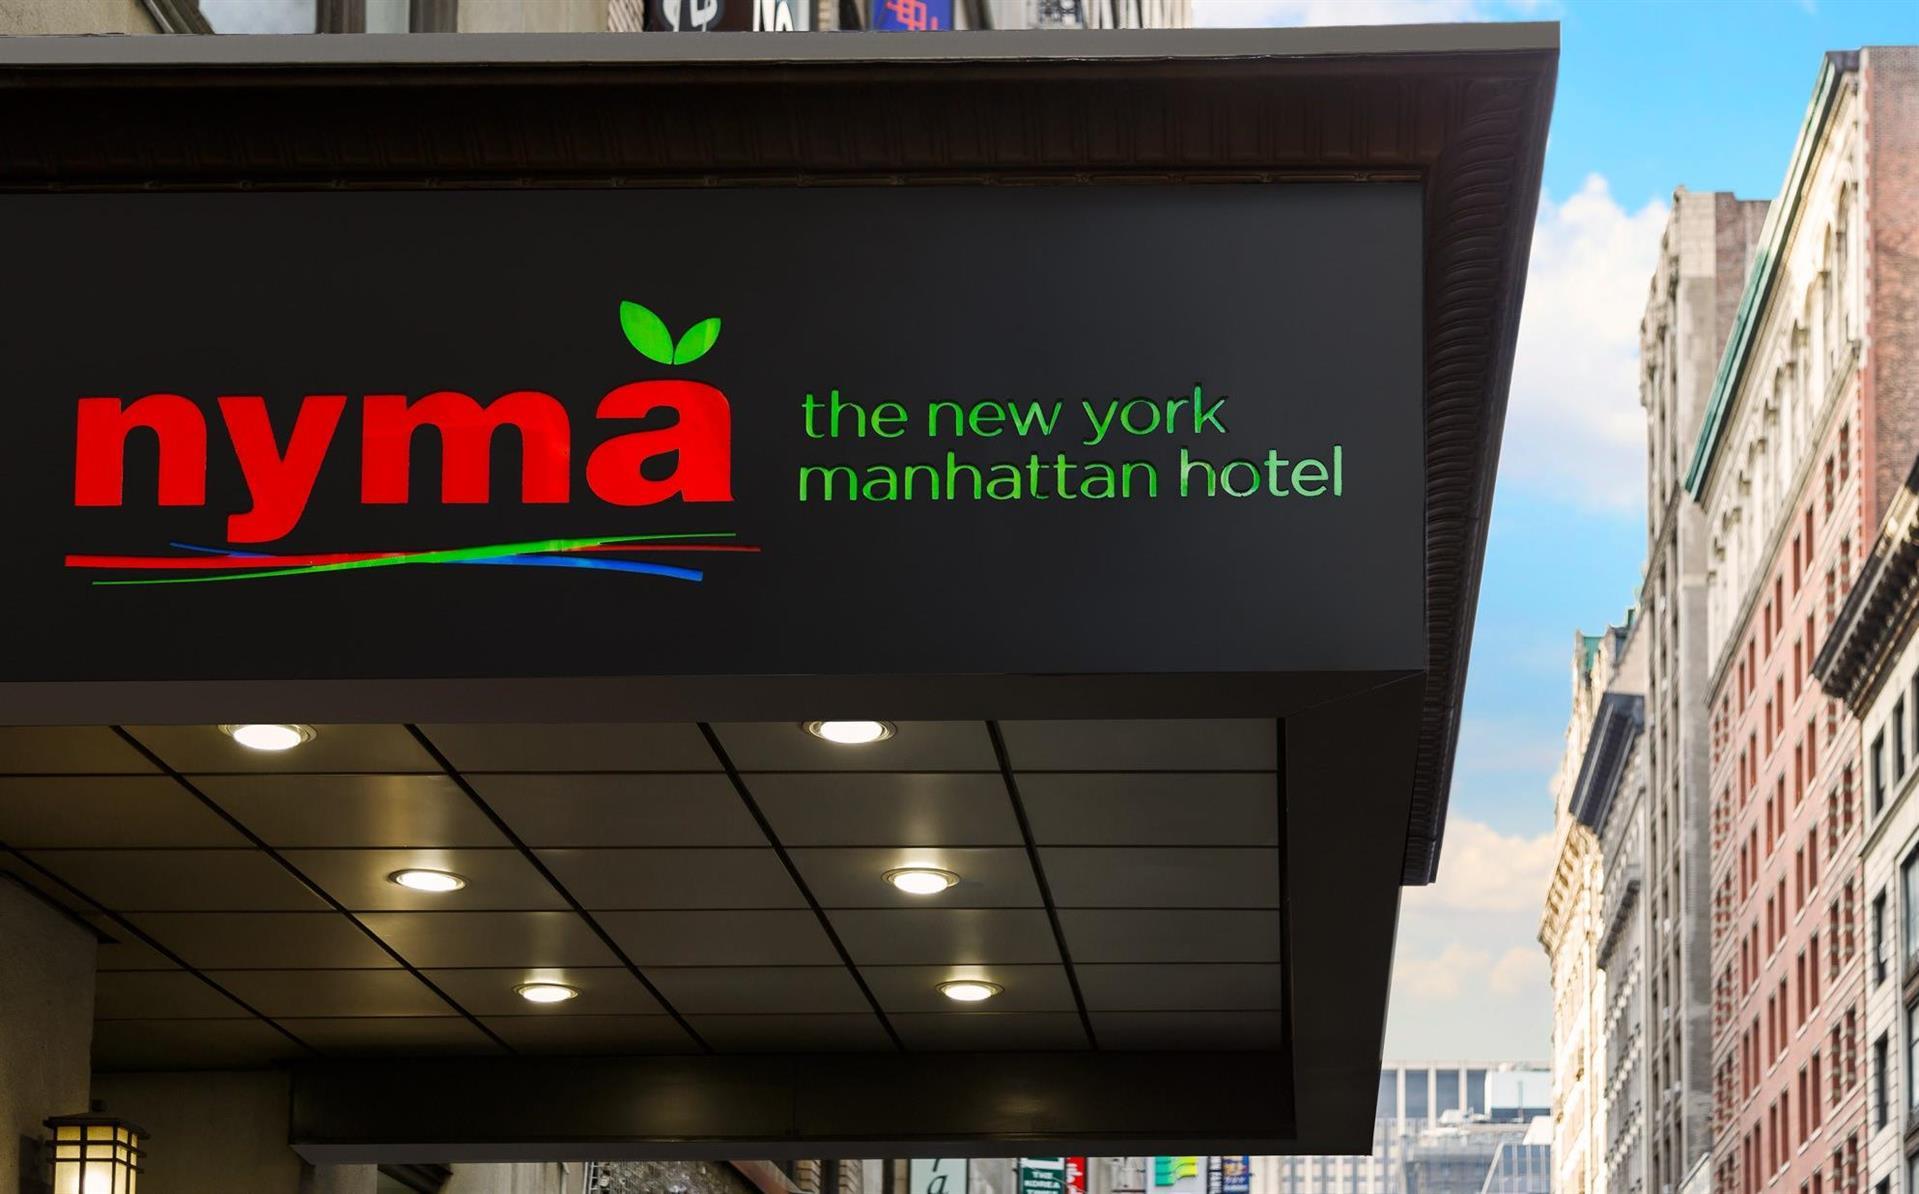 nyma, The New York Manhattan Hotel in New York, NY